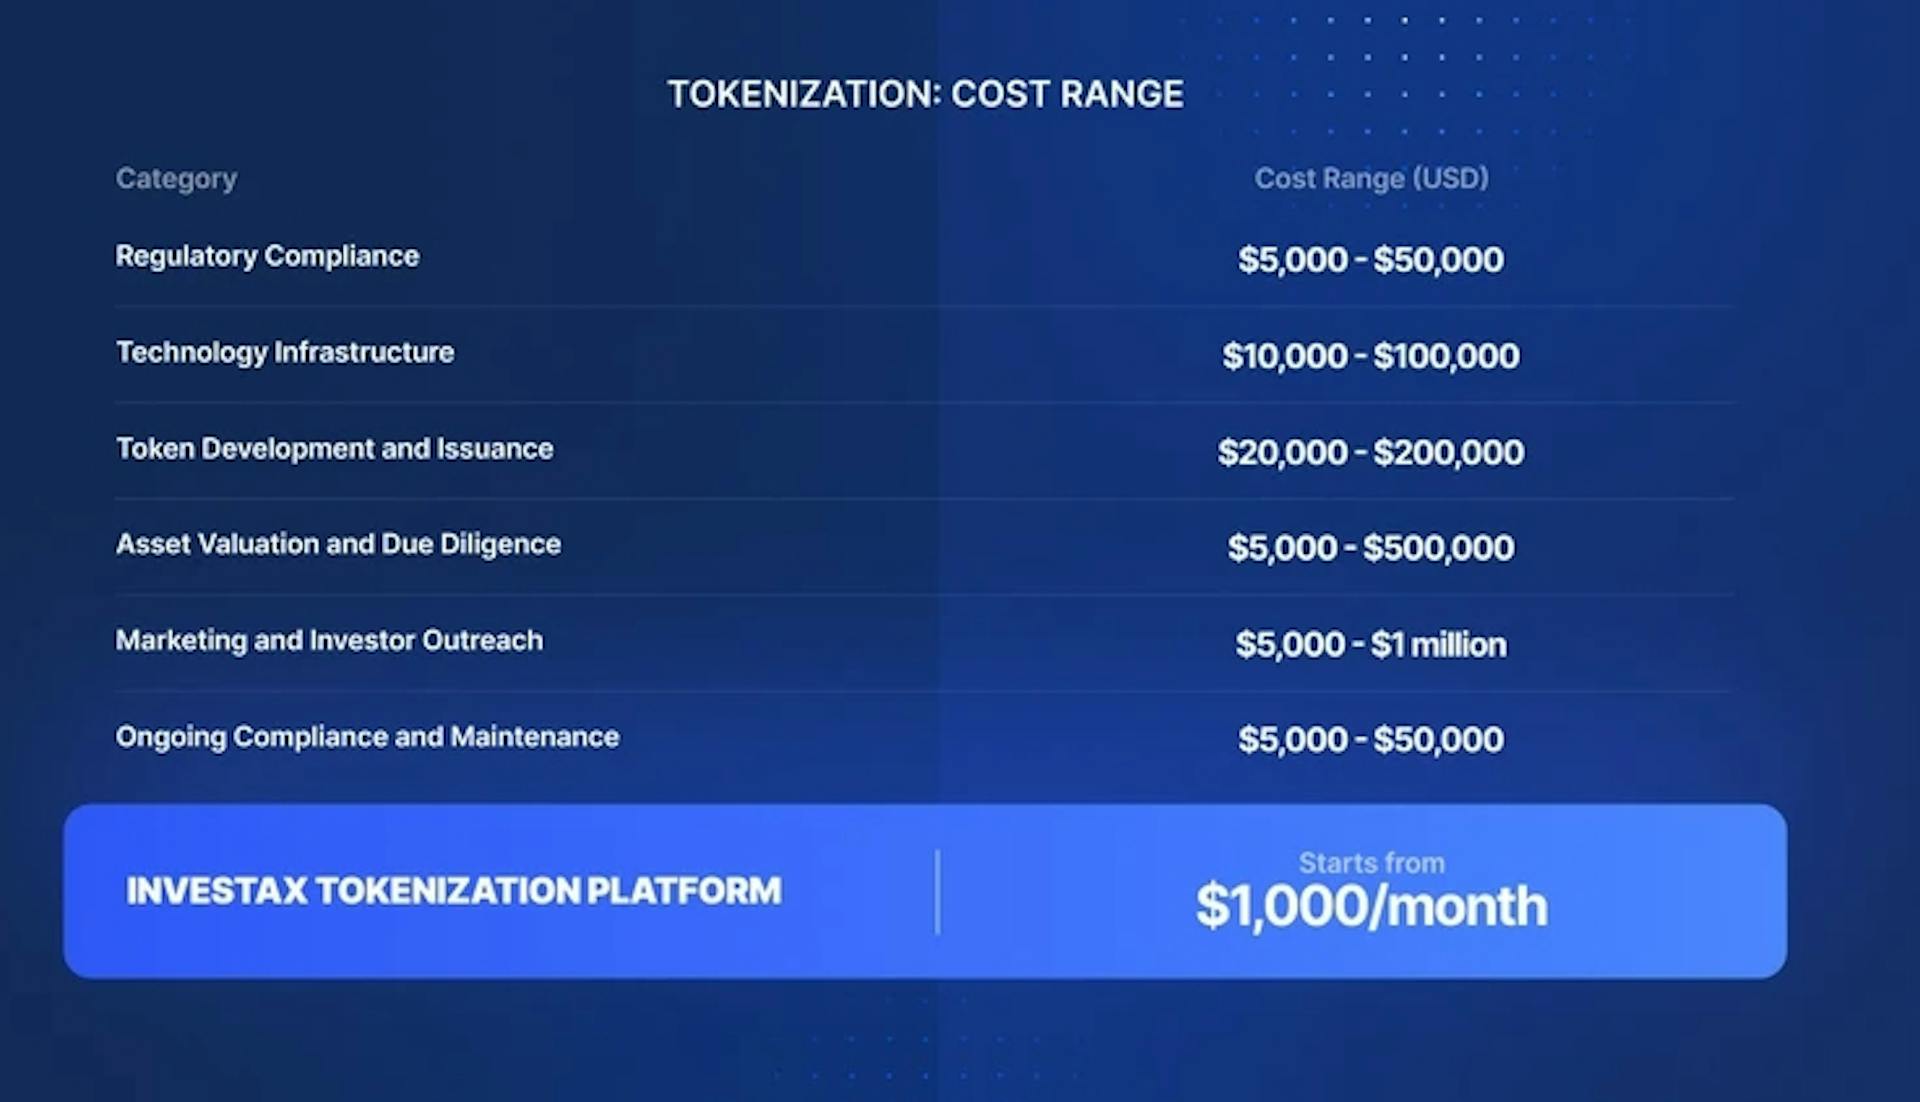 Tokenization Cost Range by Investax